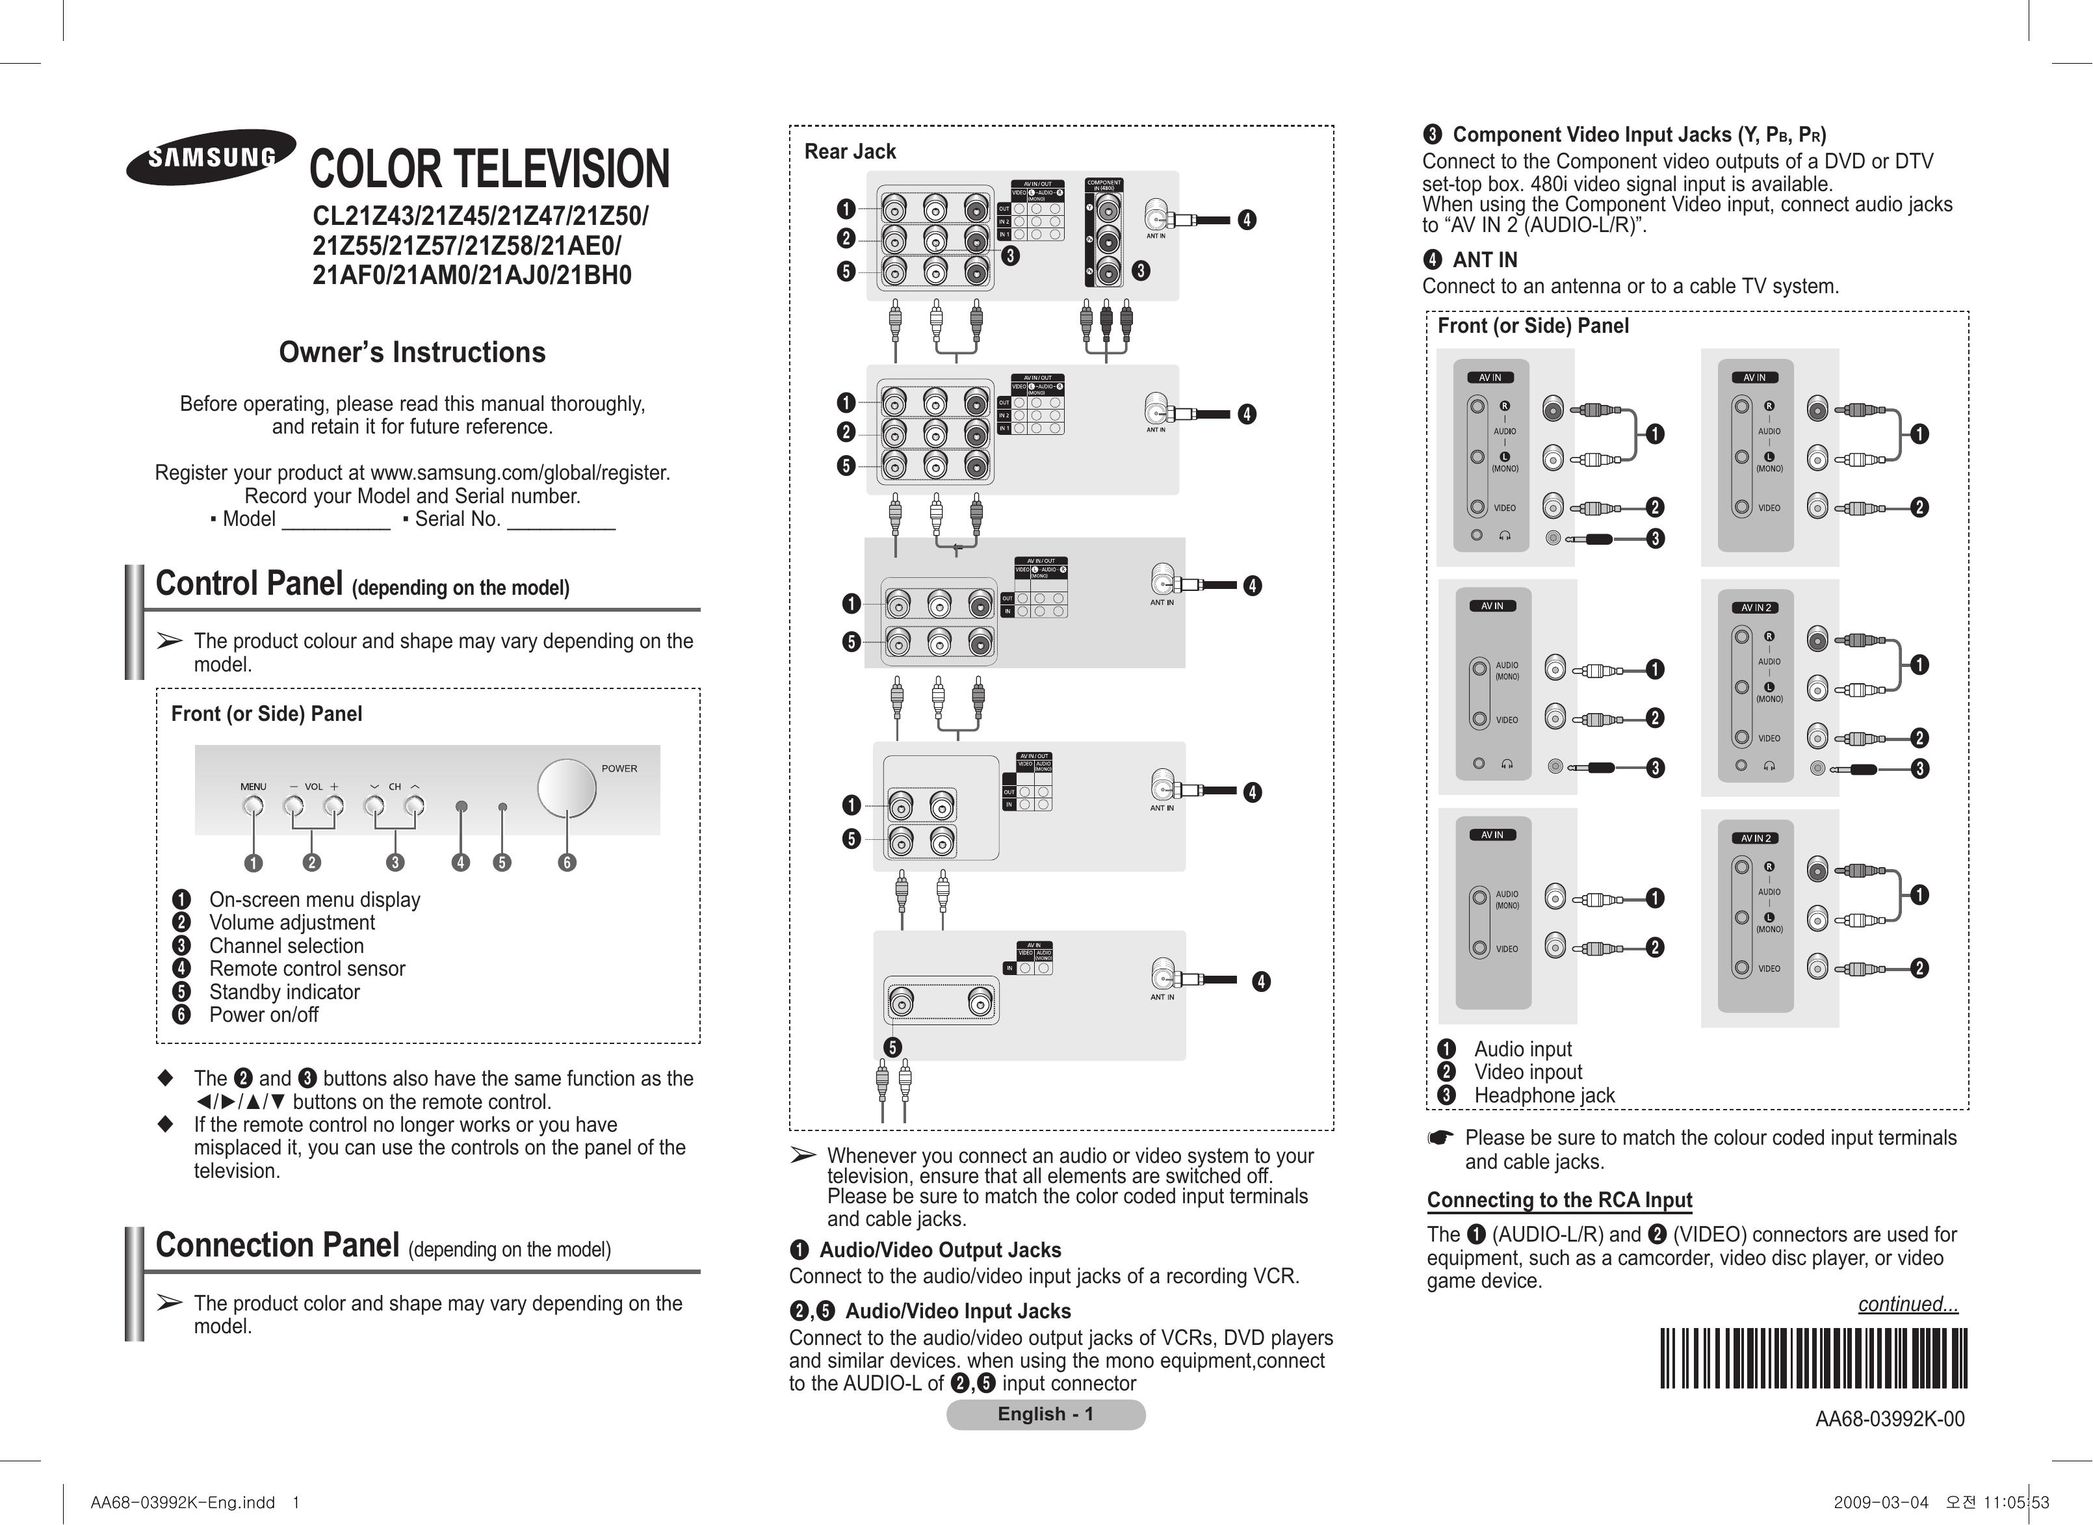 Samsung 2BH0 CRT Television User Manual